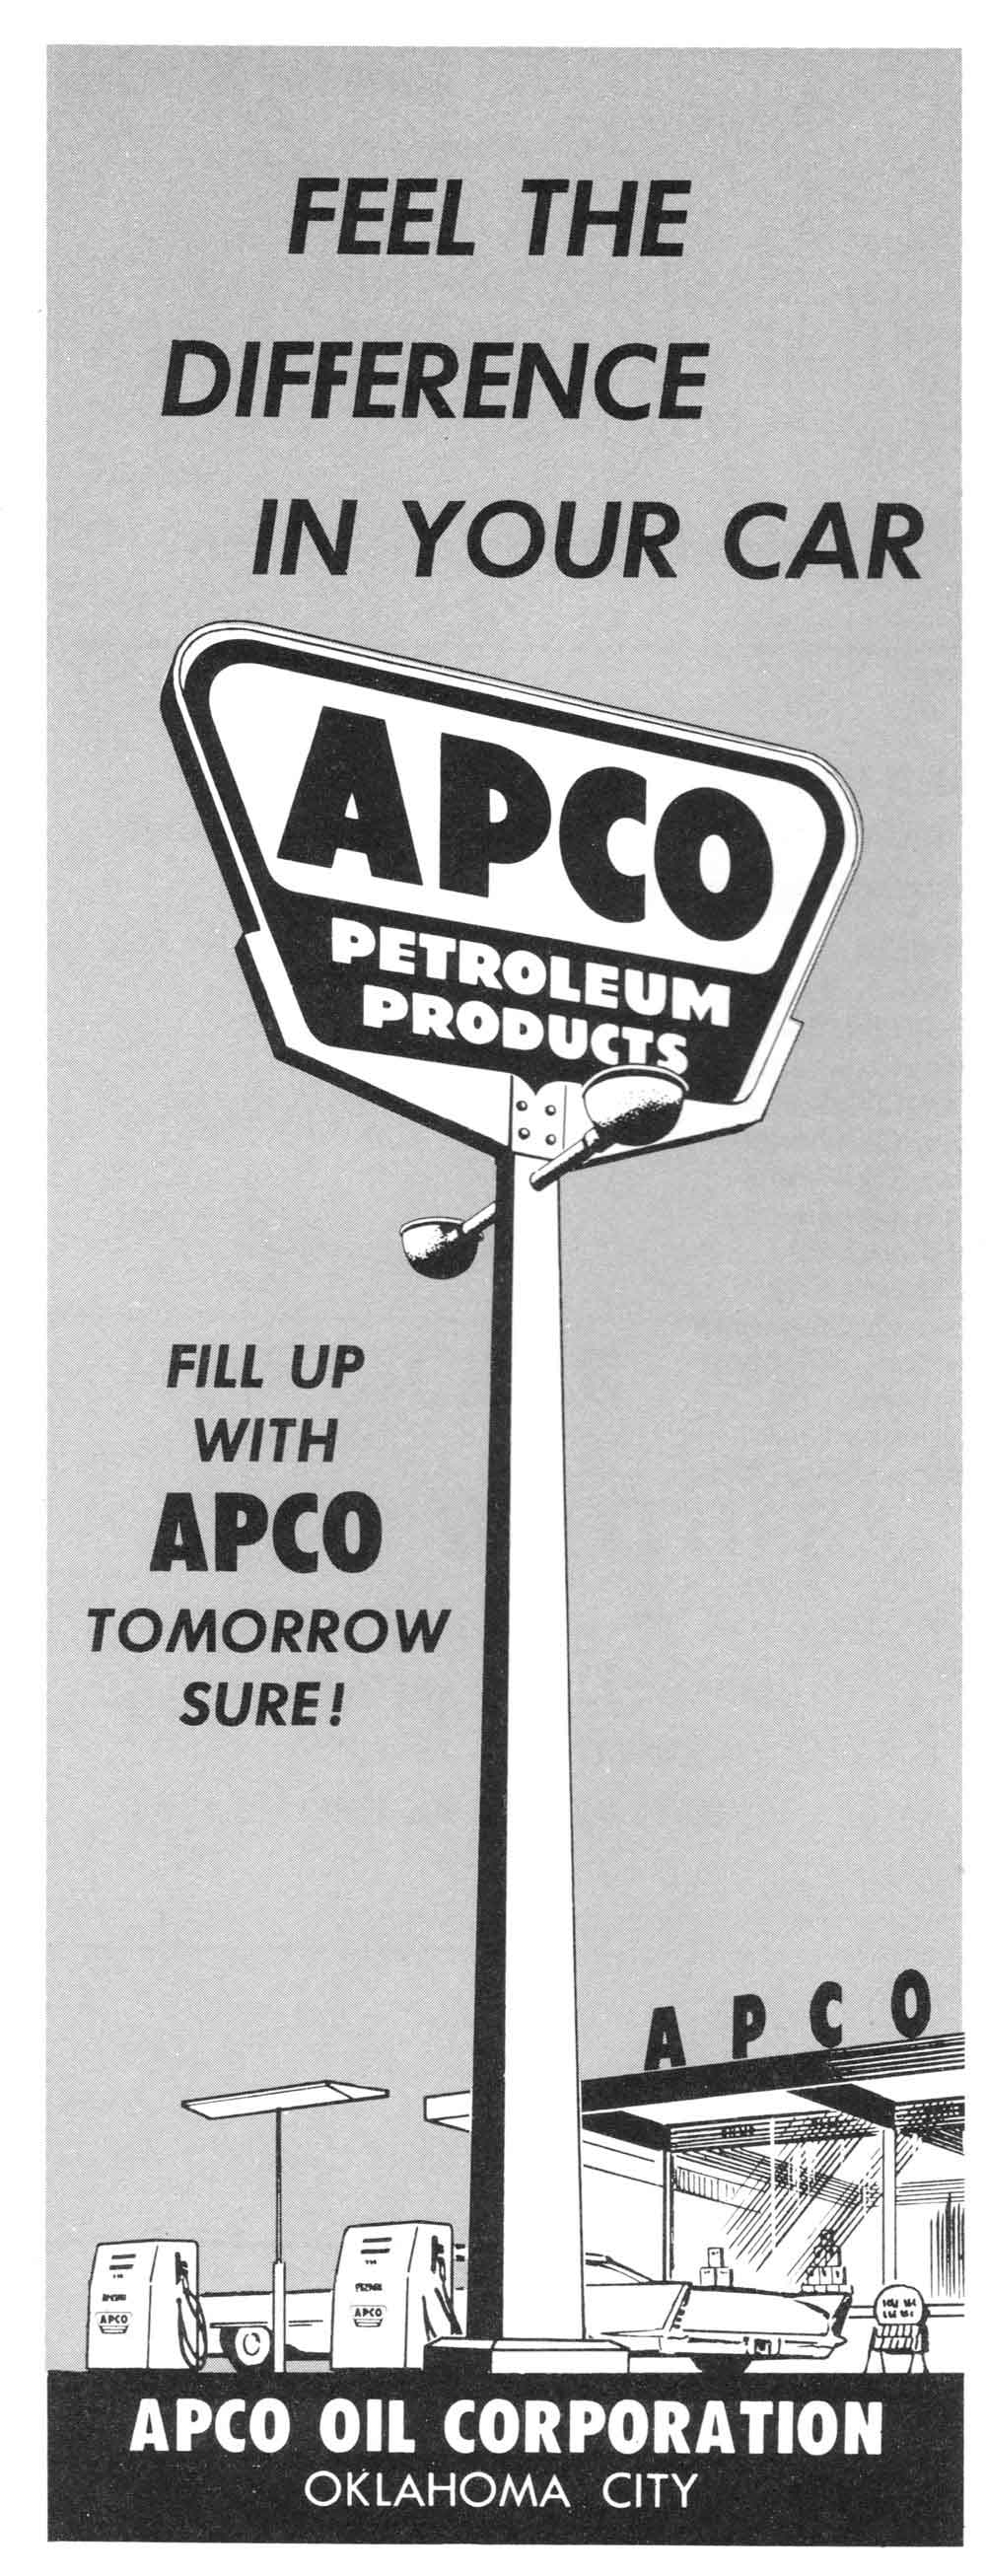 (KYLE.2010.01.01) - Apco Oil Corporation